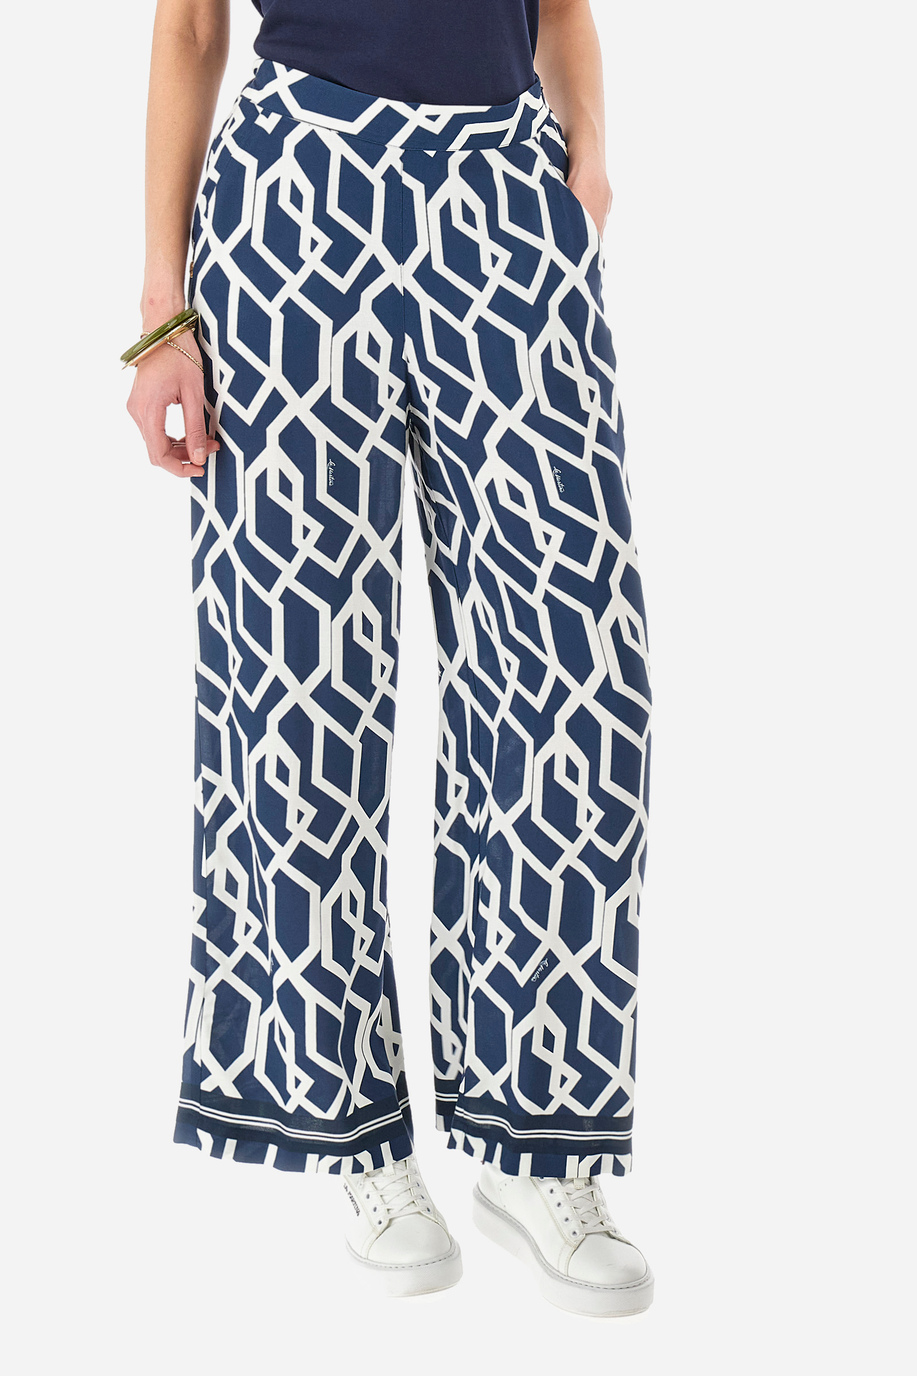 Pantaloni a palazzo regular fit in tessuto sintetico - Yeshodhana - Donna | La Martina - Official Online Shop